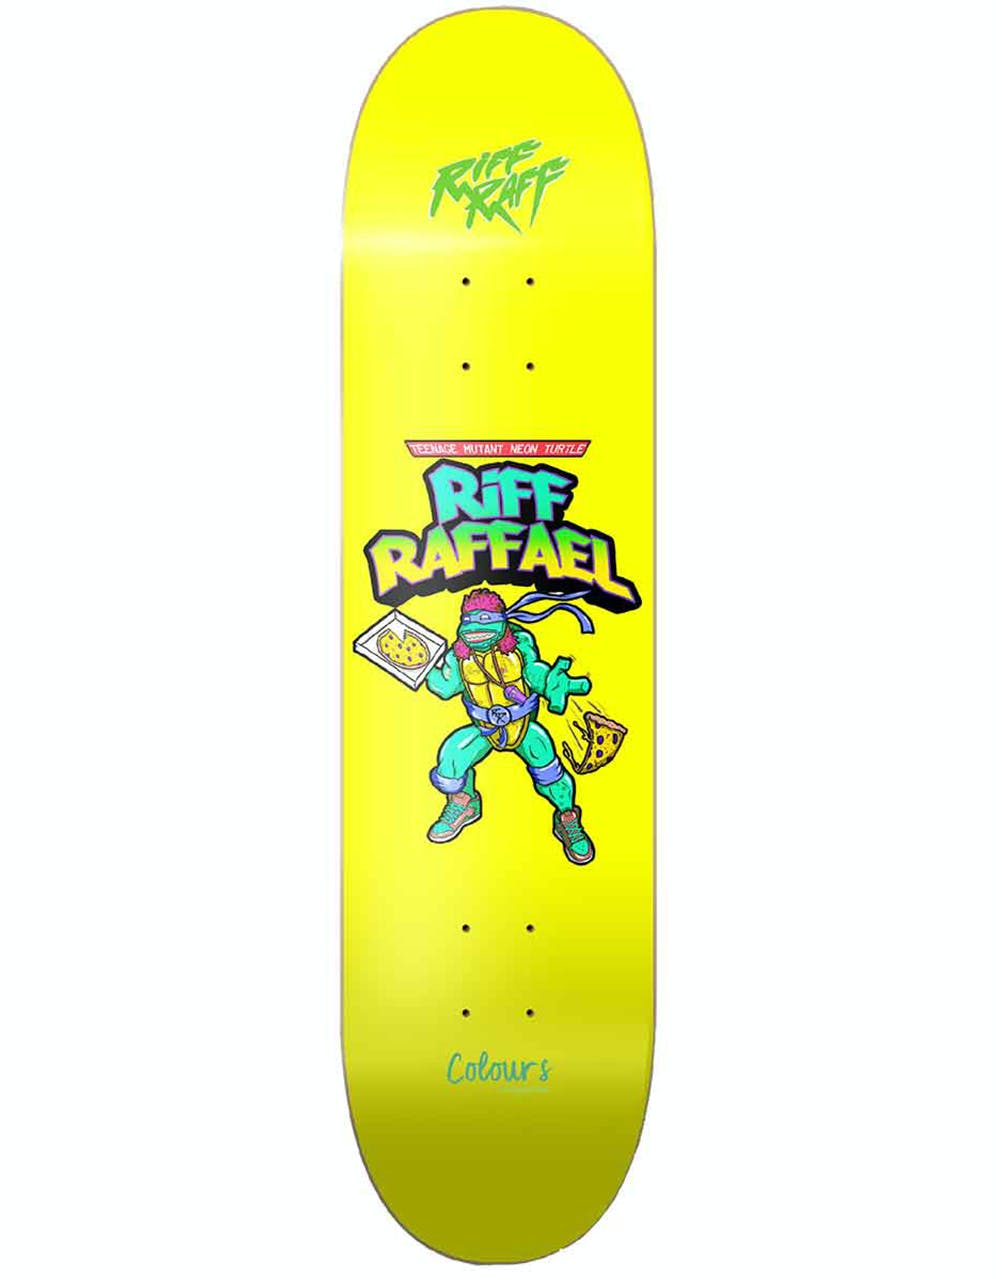 Colours Collectiv Riff Raffael Skateboard Deck - 8.25"